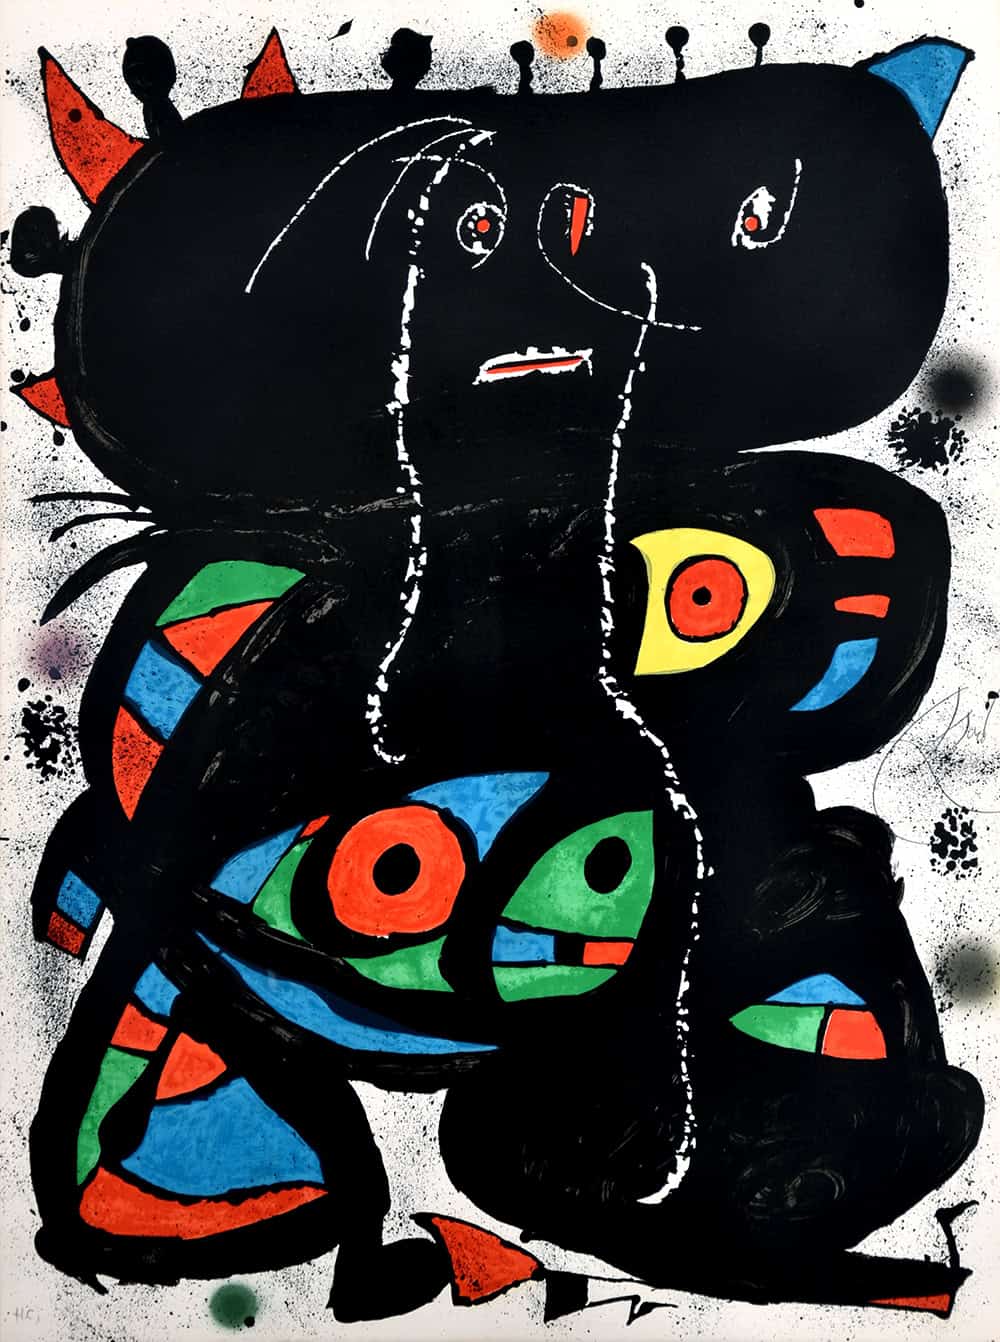 Joan Miró, Hommage aux Prix Nobel (Tribute to the Nobel Prize), 1976